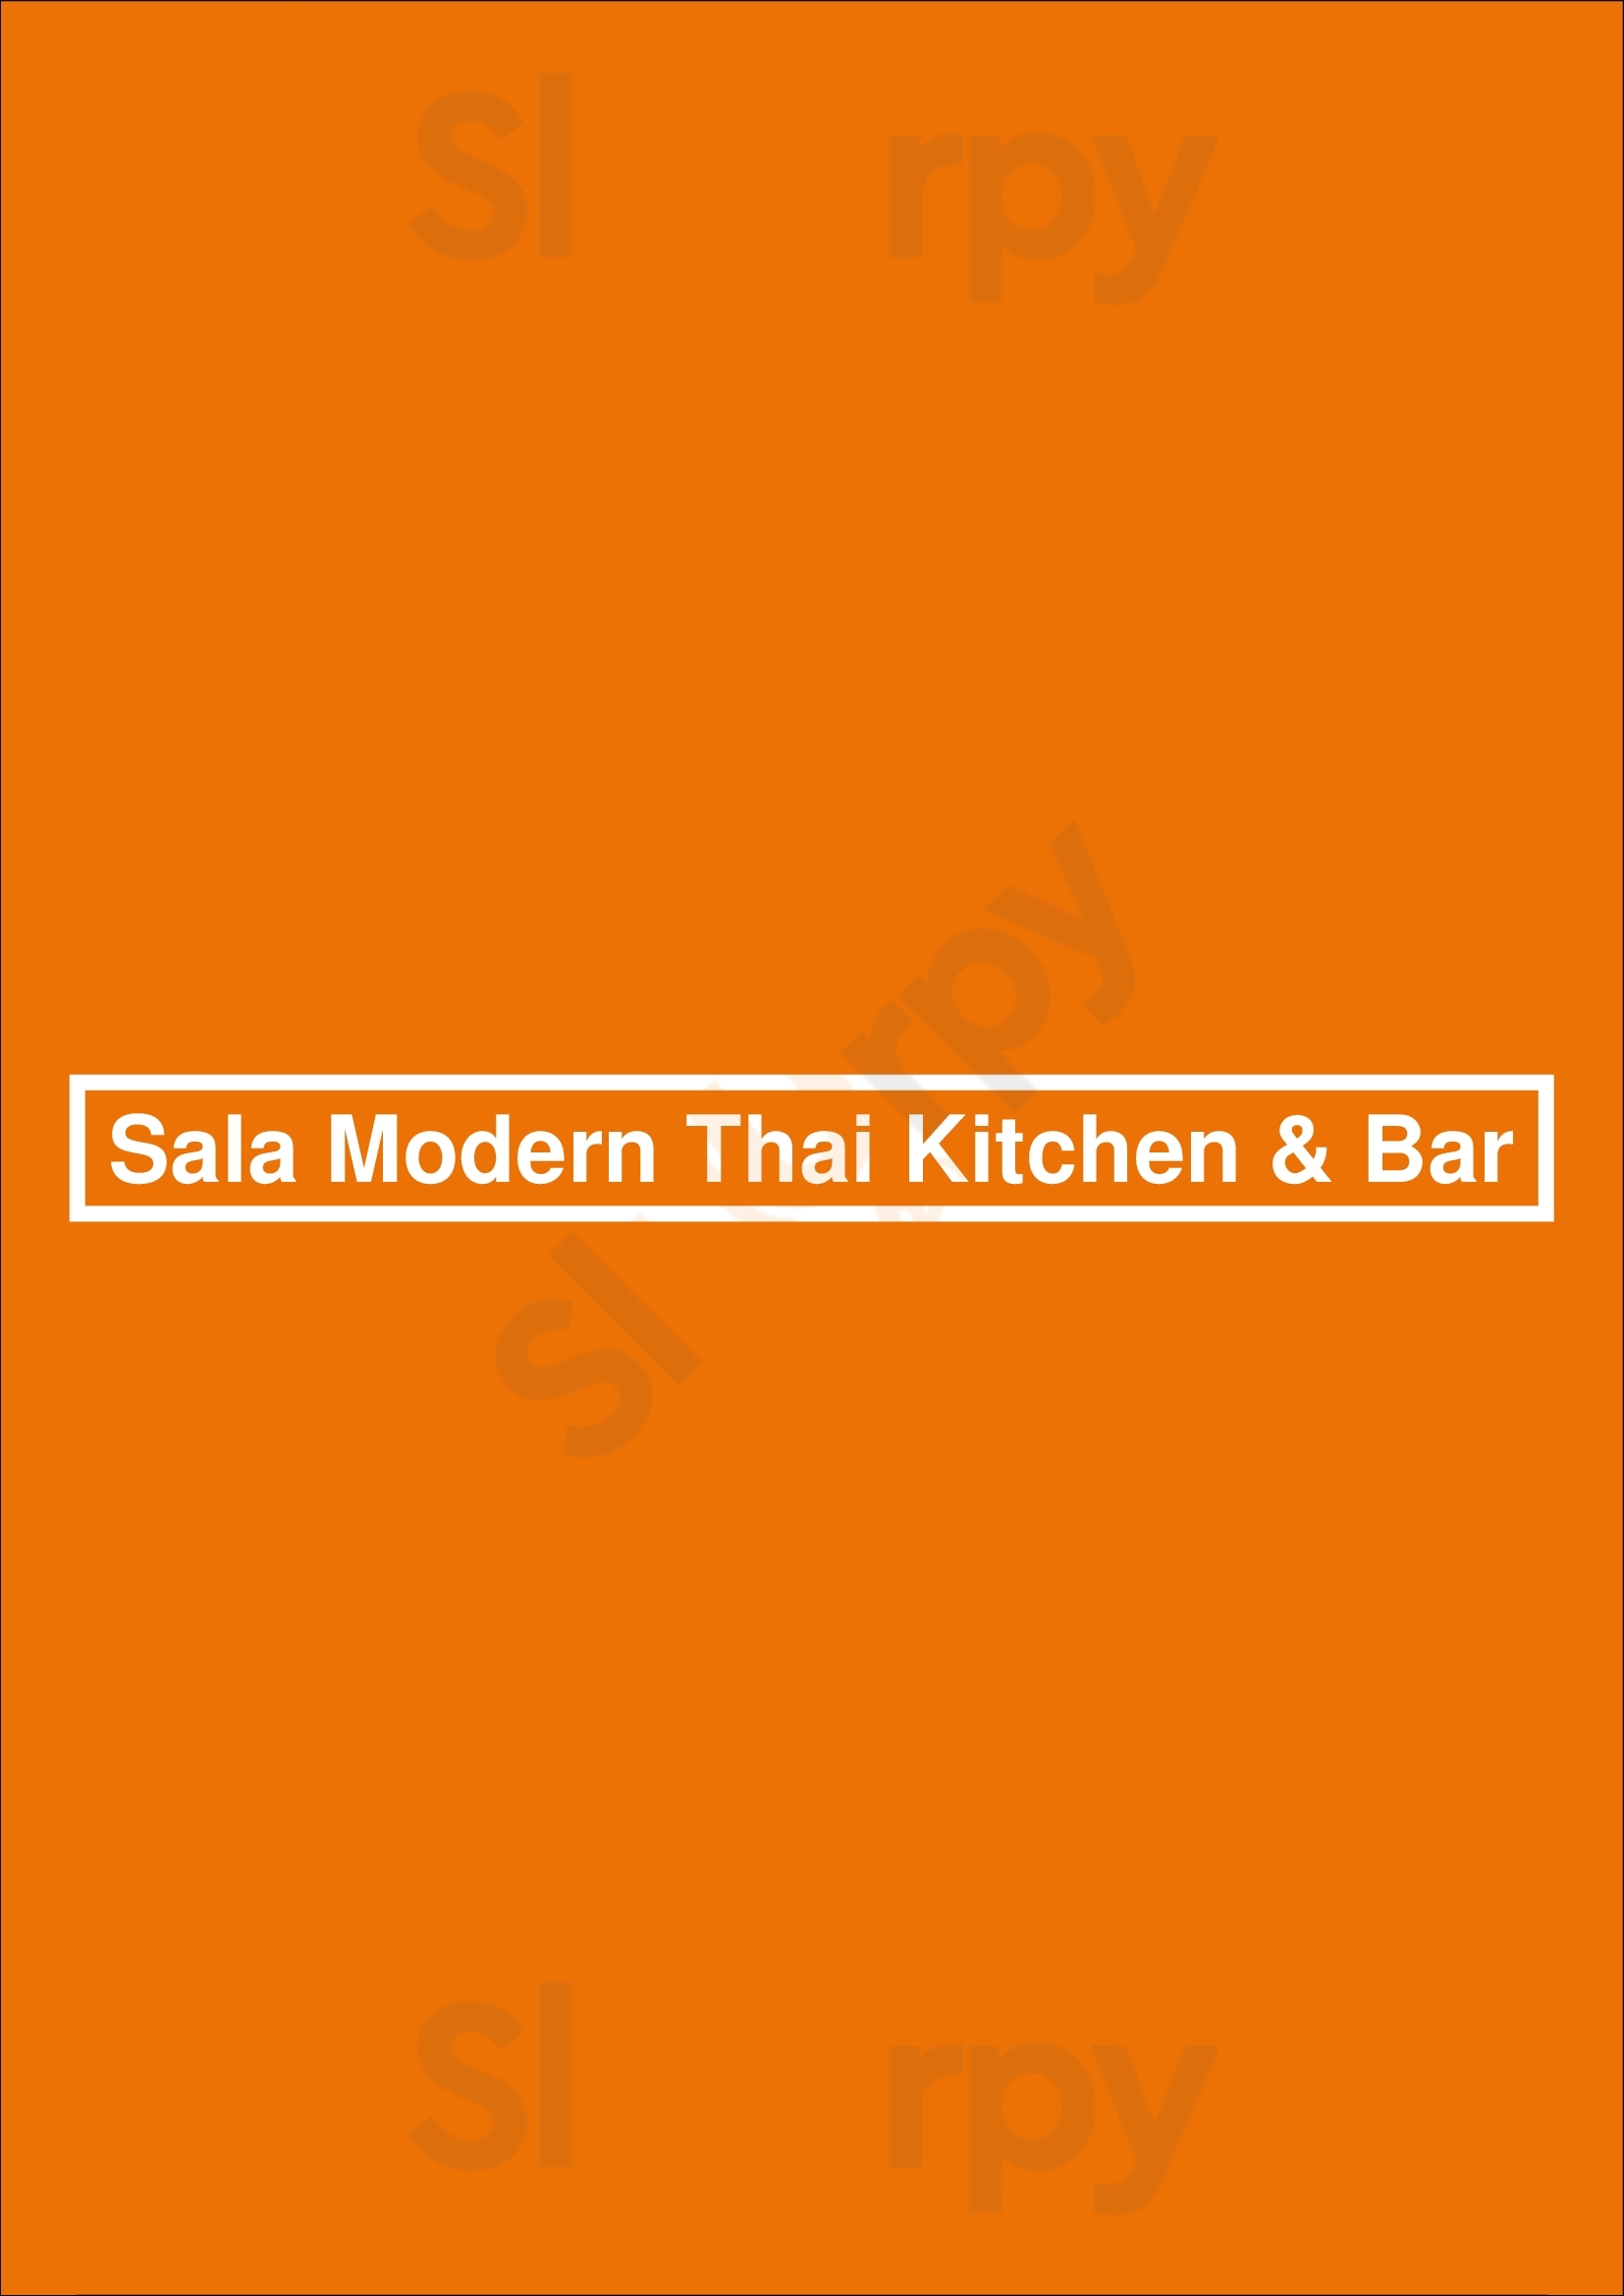 Sala Modern Thai Kitchen & Bar Toronto Menu - 1